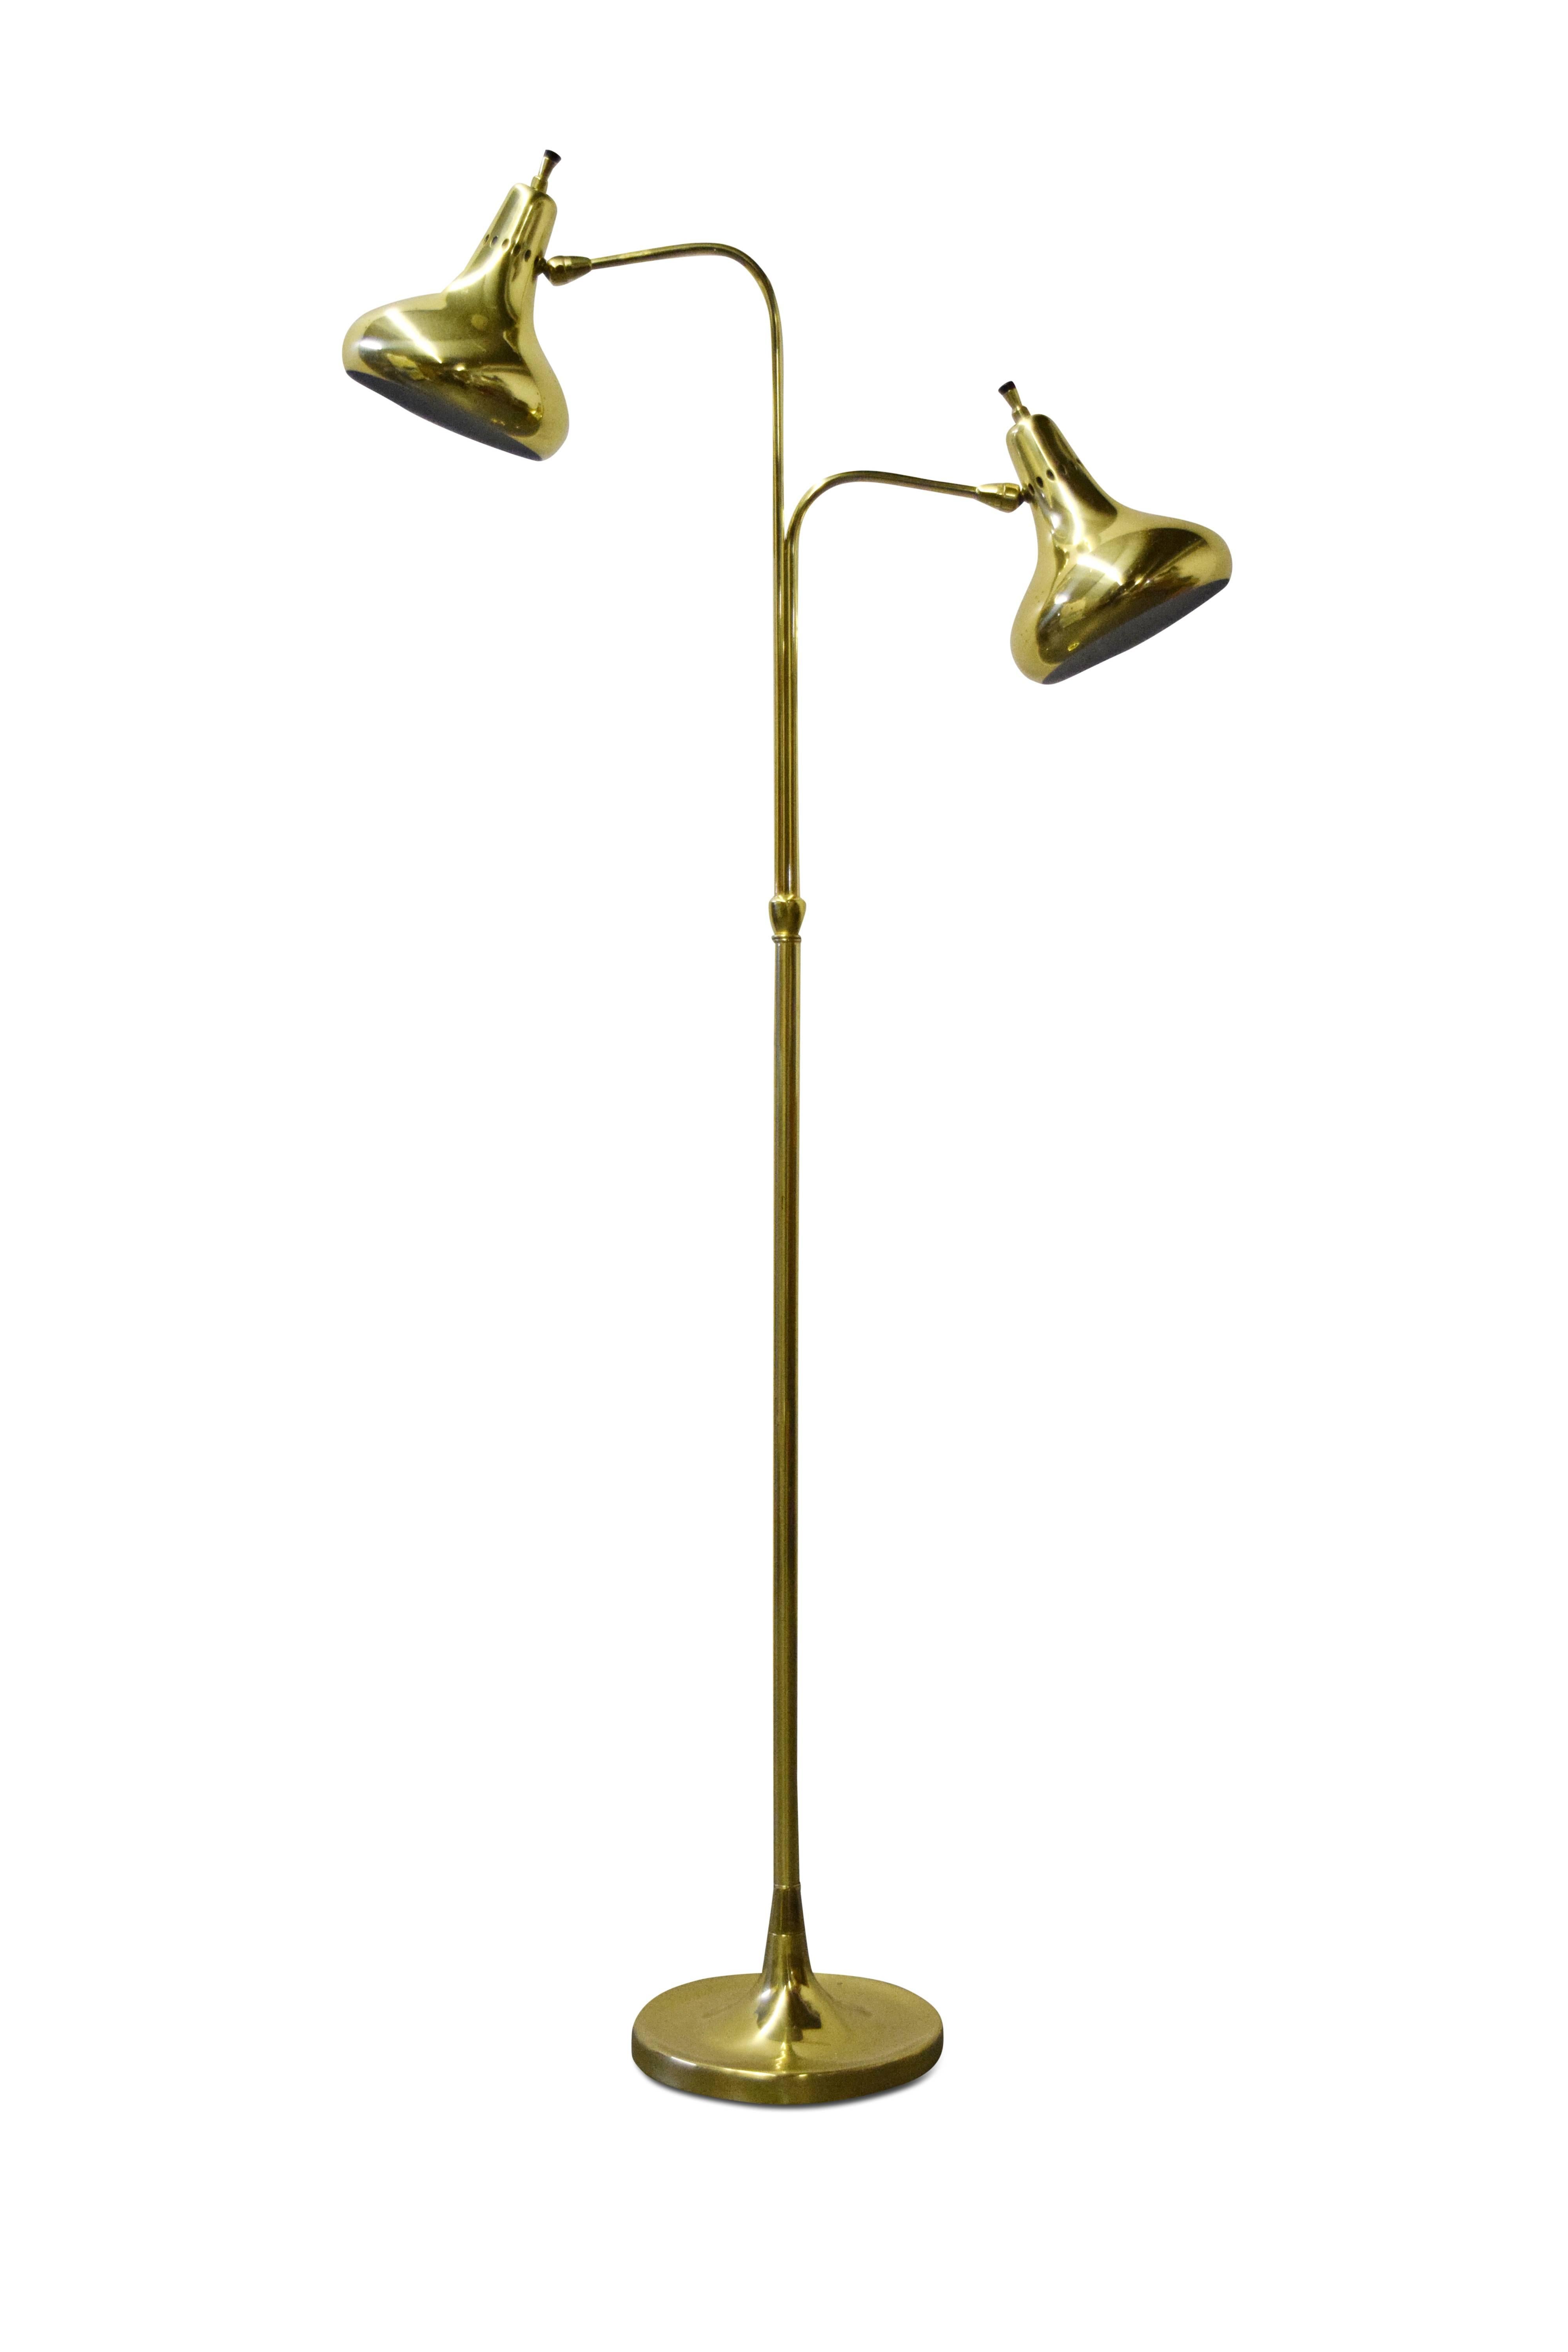 Lightolier brass dual headed floor lamp.